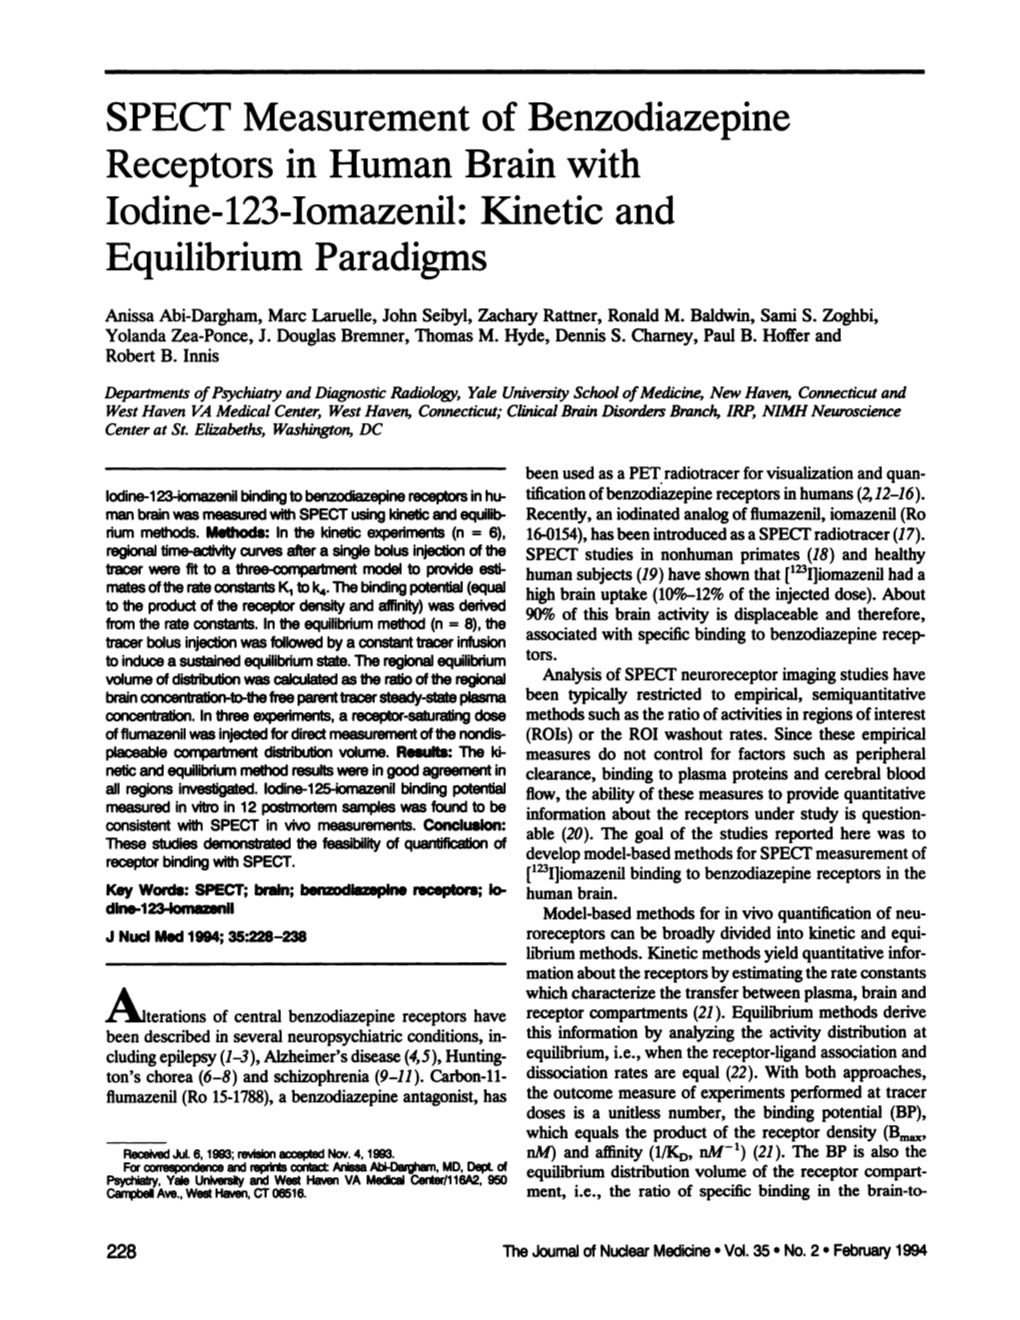 SPECT Measurement of Benzodiazepine Receptors in Human Brain with Iodine-123-Iomazenil: Kinetic and Equilibrium Paradigms